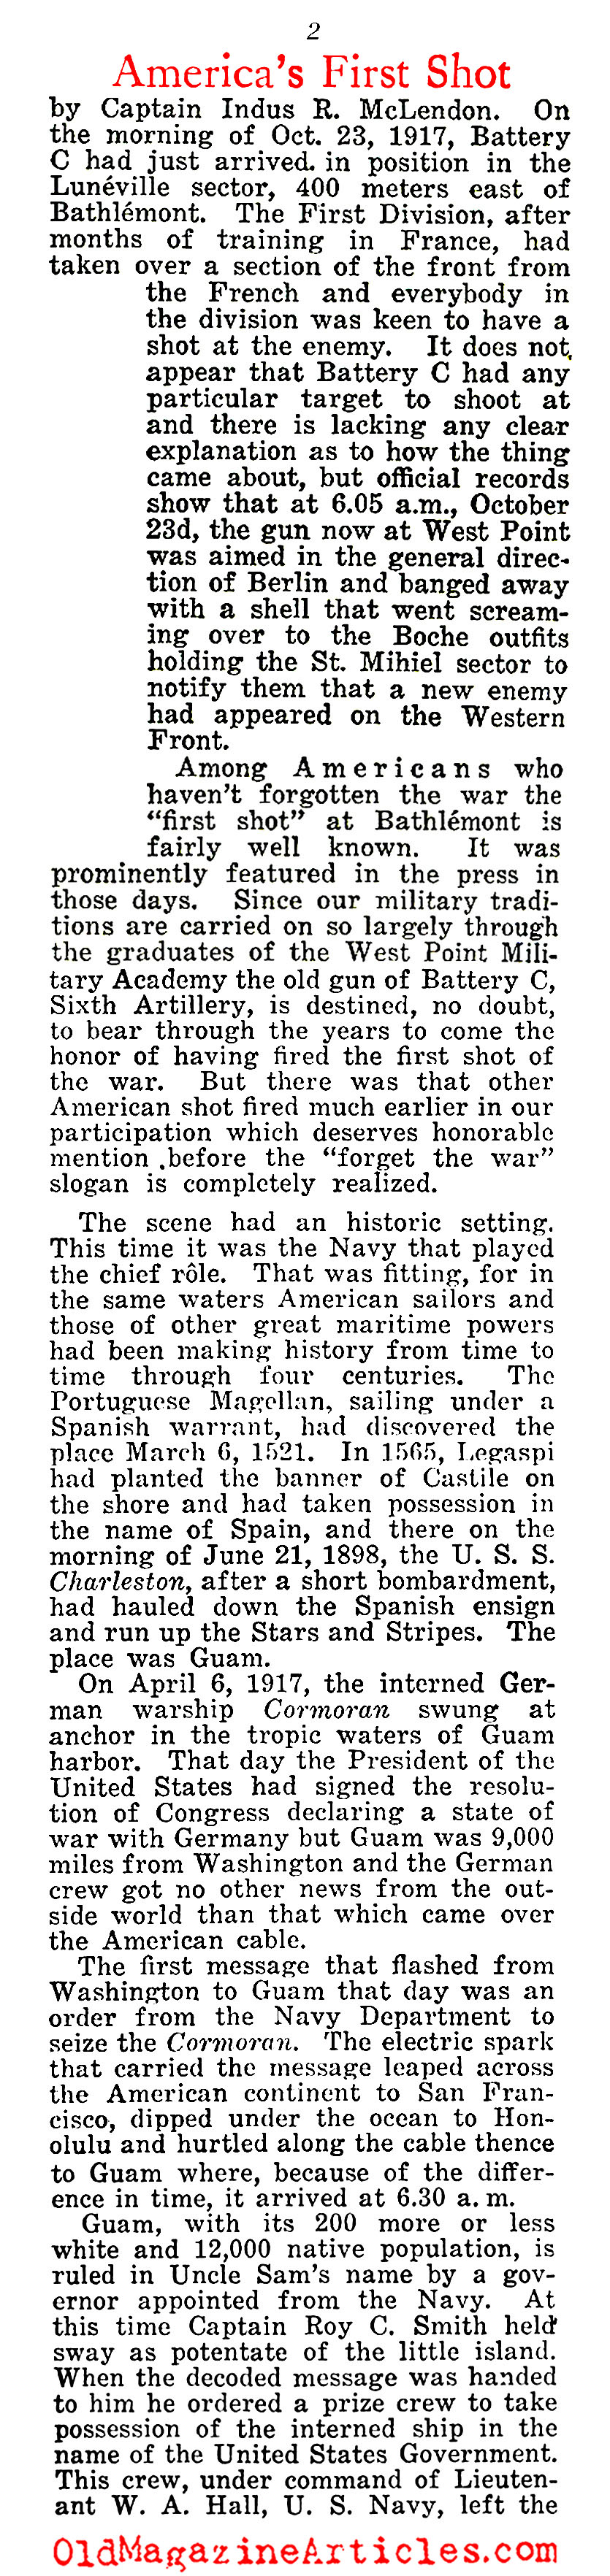 U.S. Navy Fired America's First Shot   (Literary Digest, 1917)